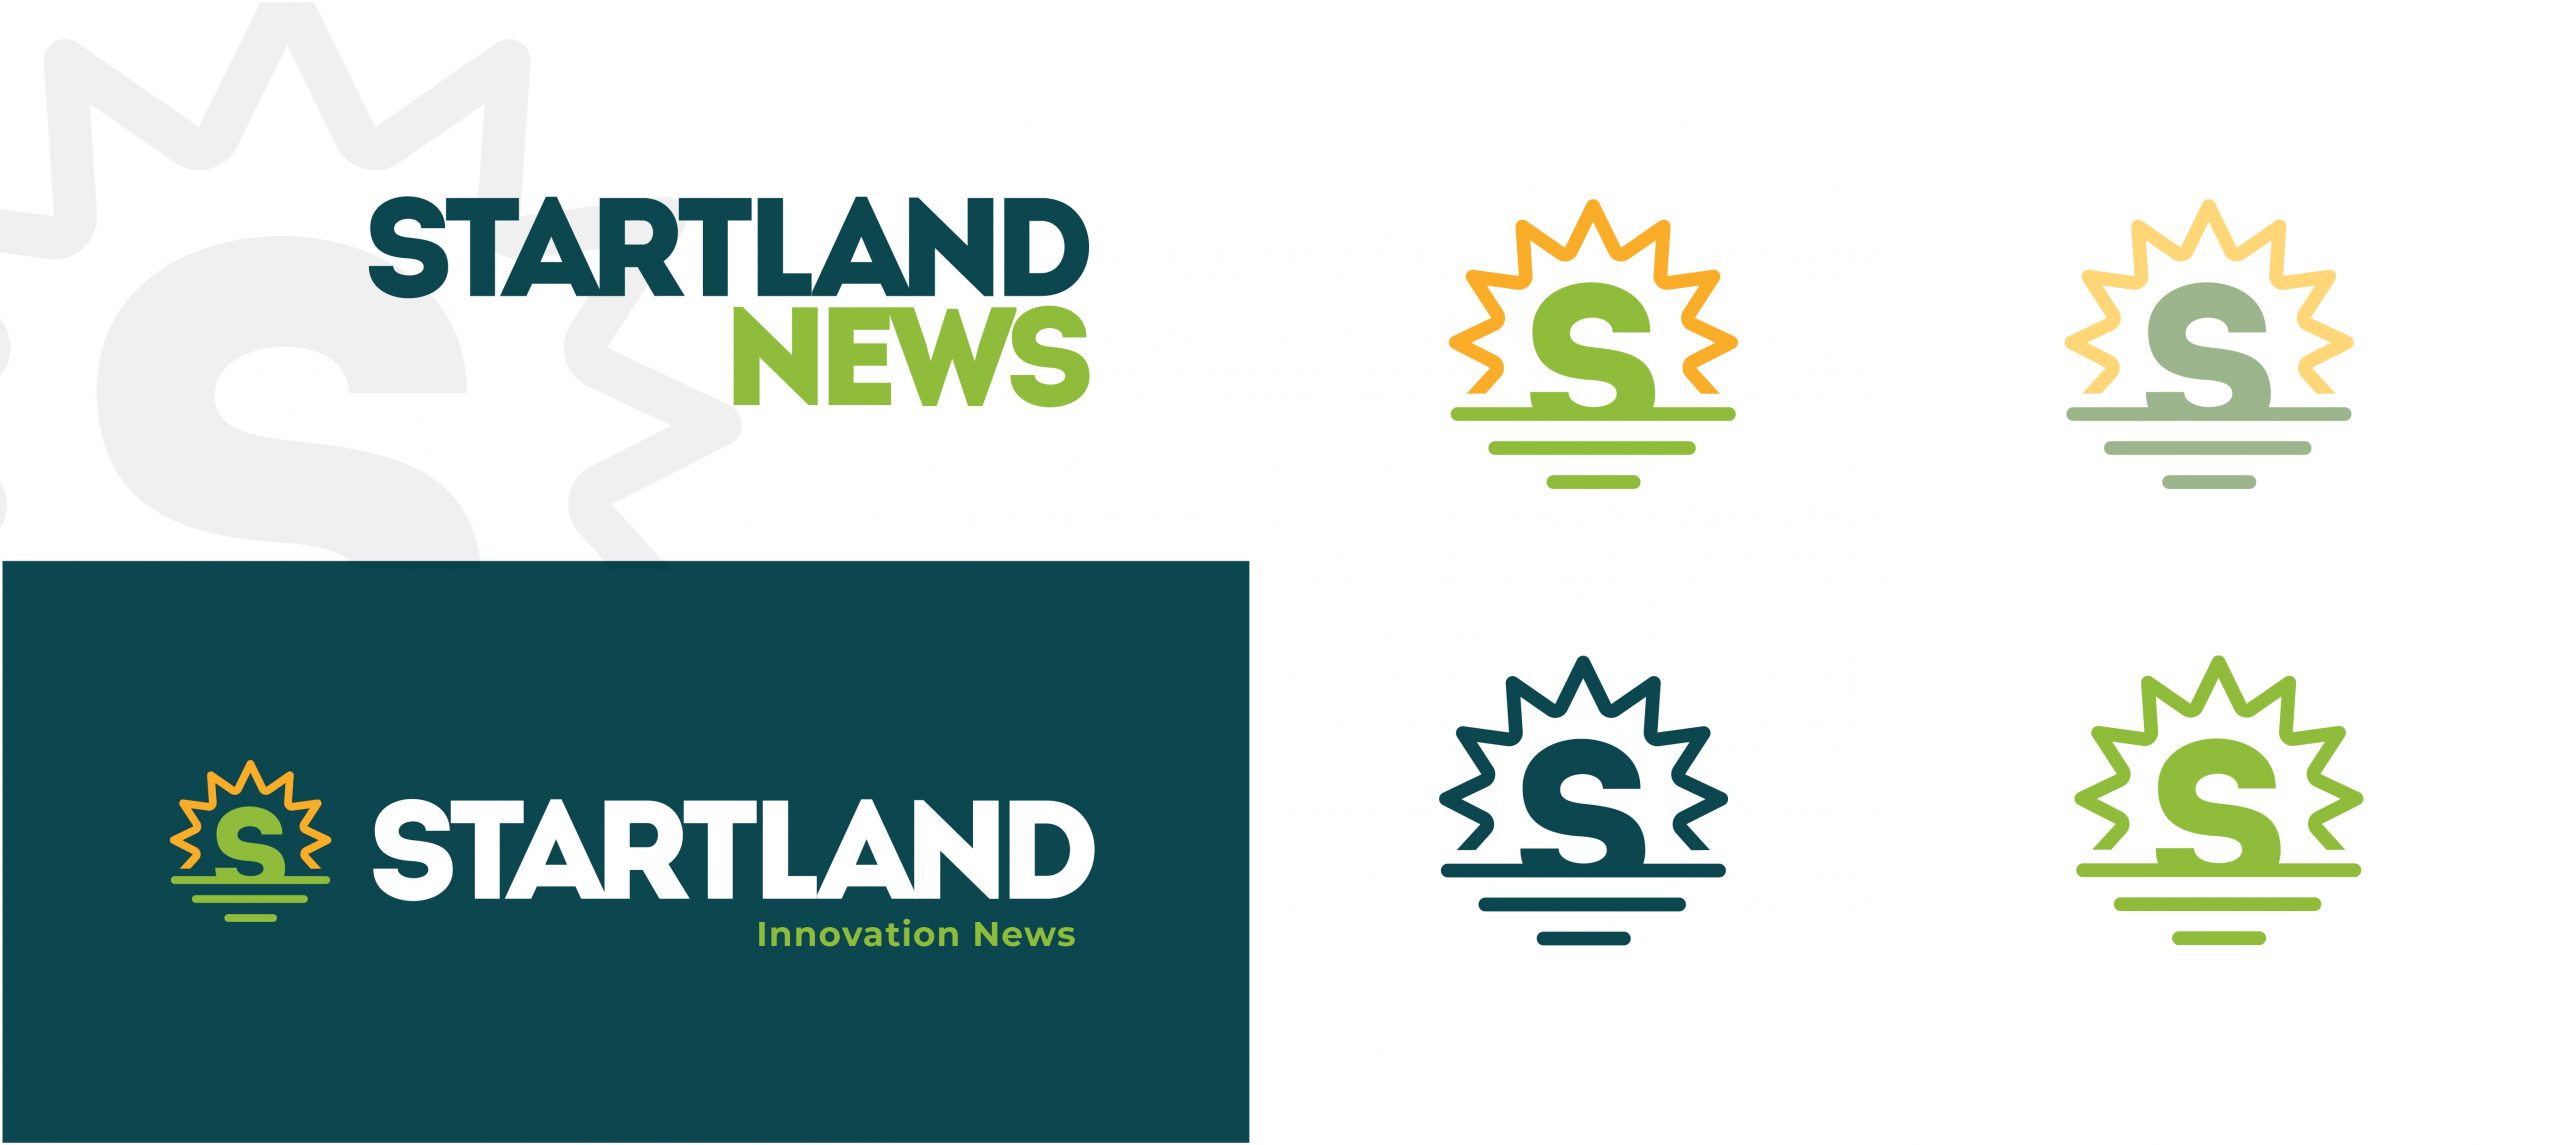 SLN-2019-Logos-2